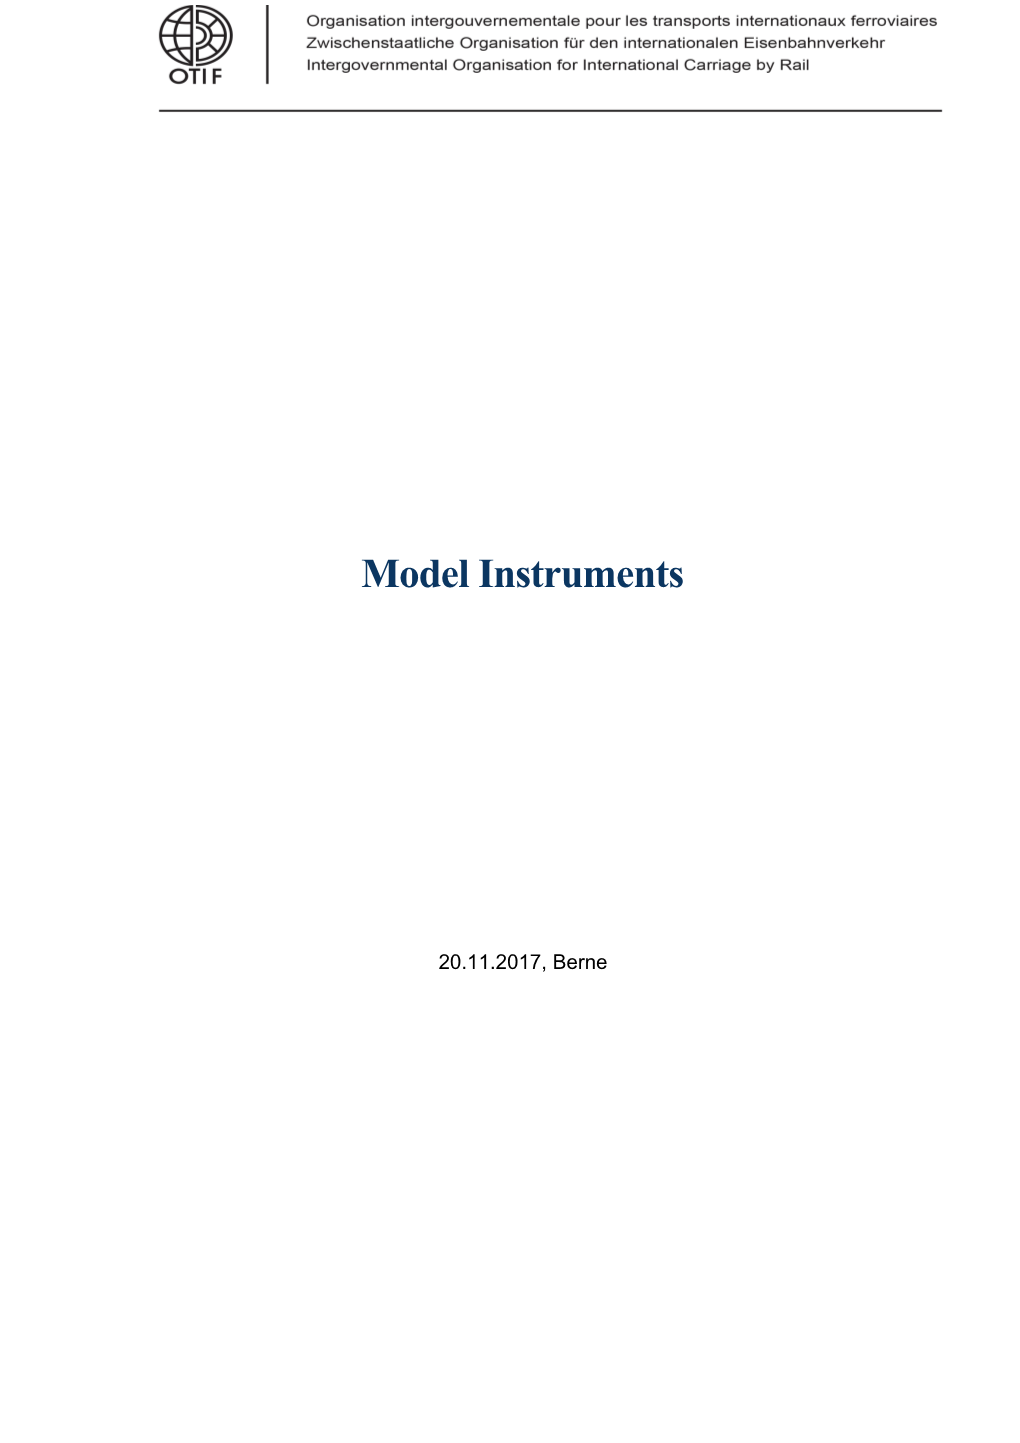 Model Instruments